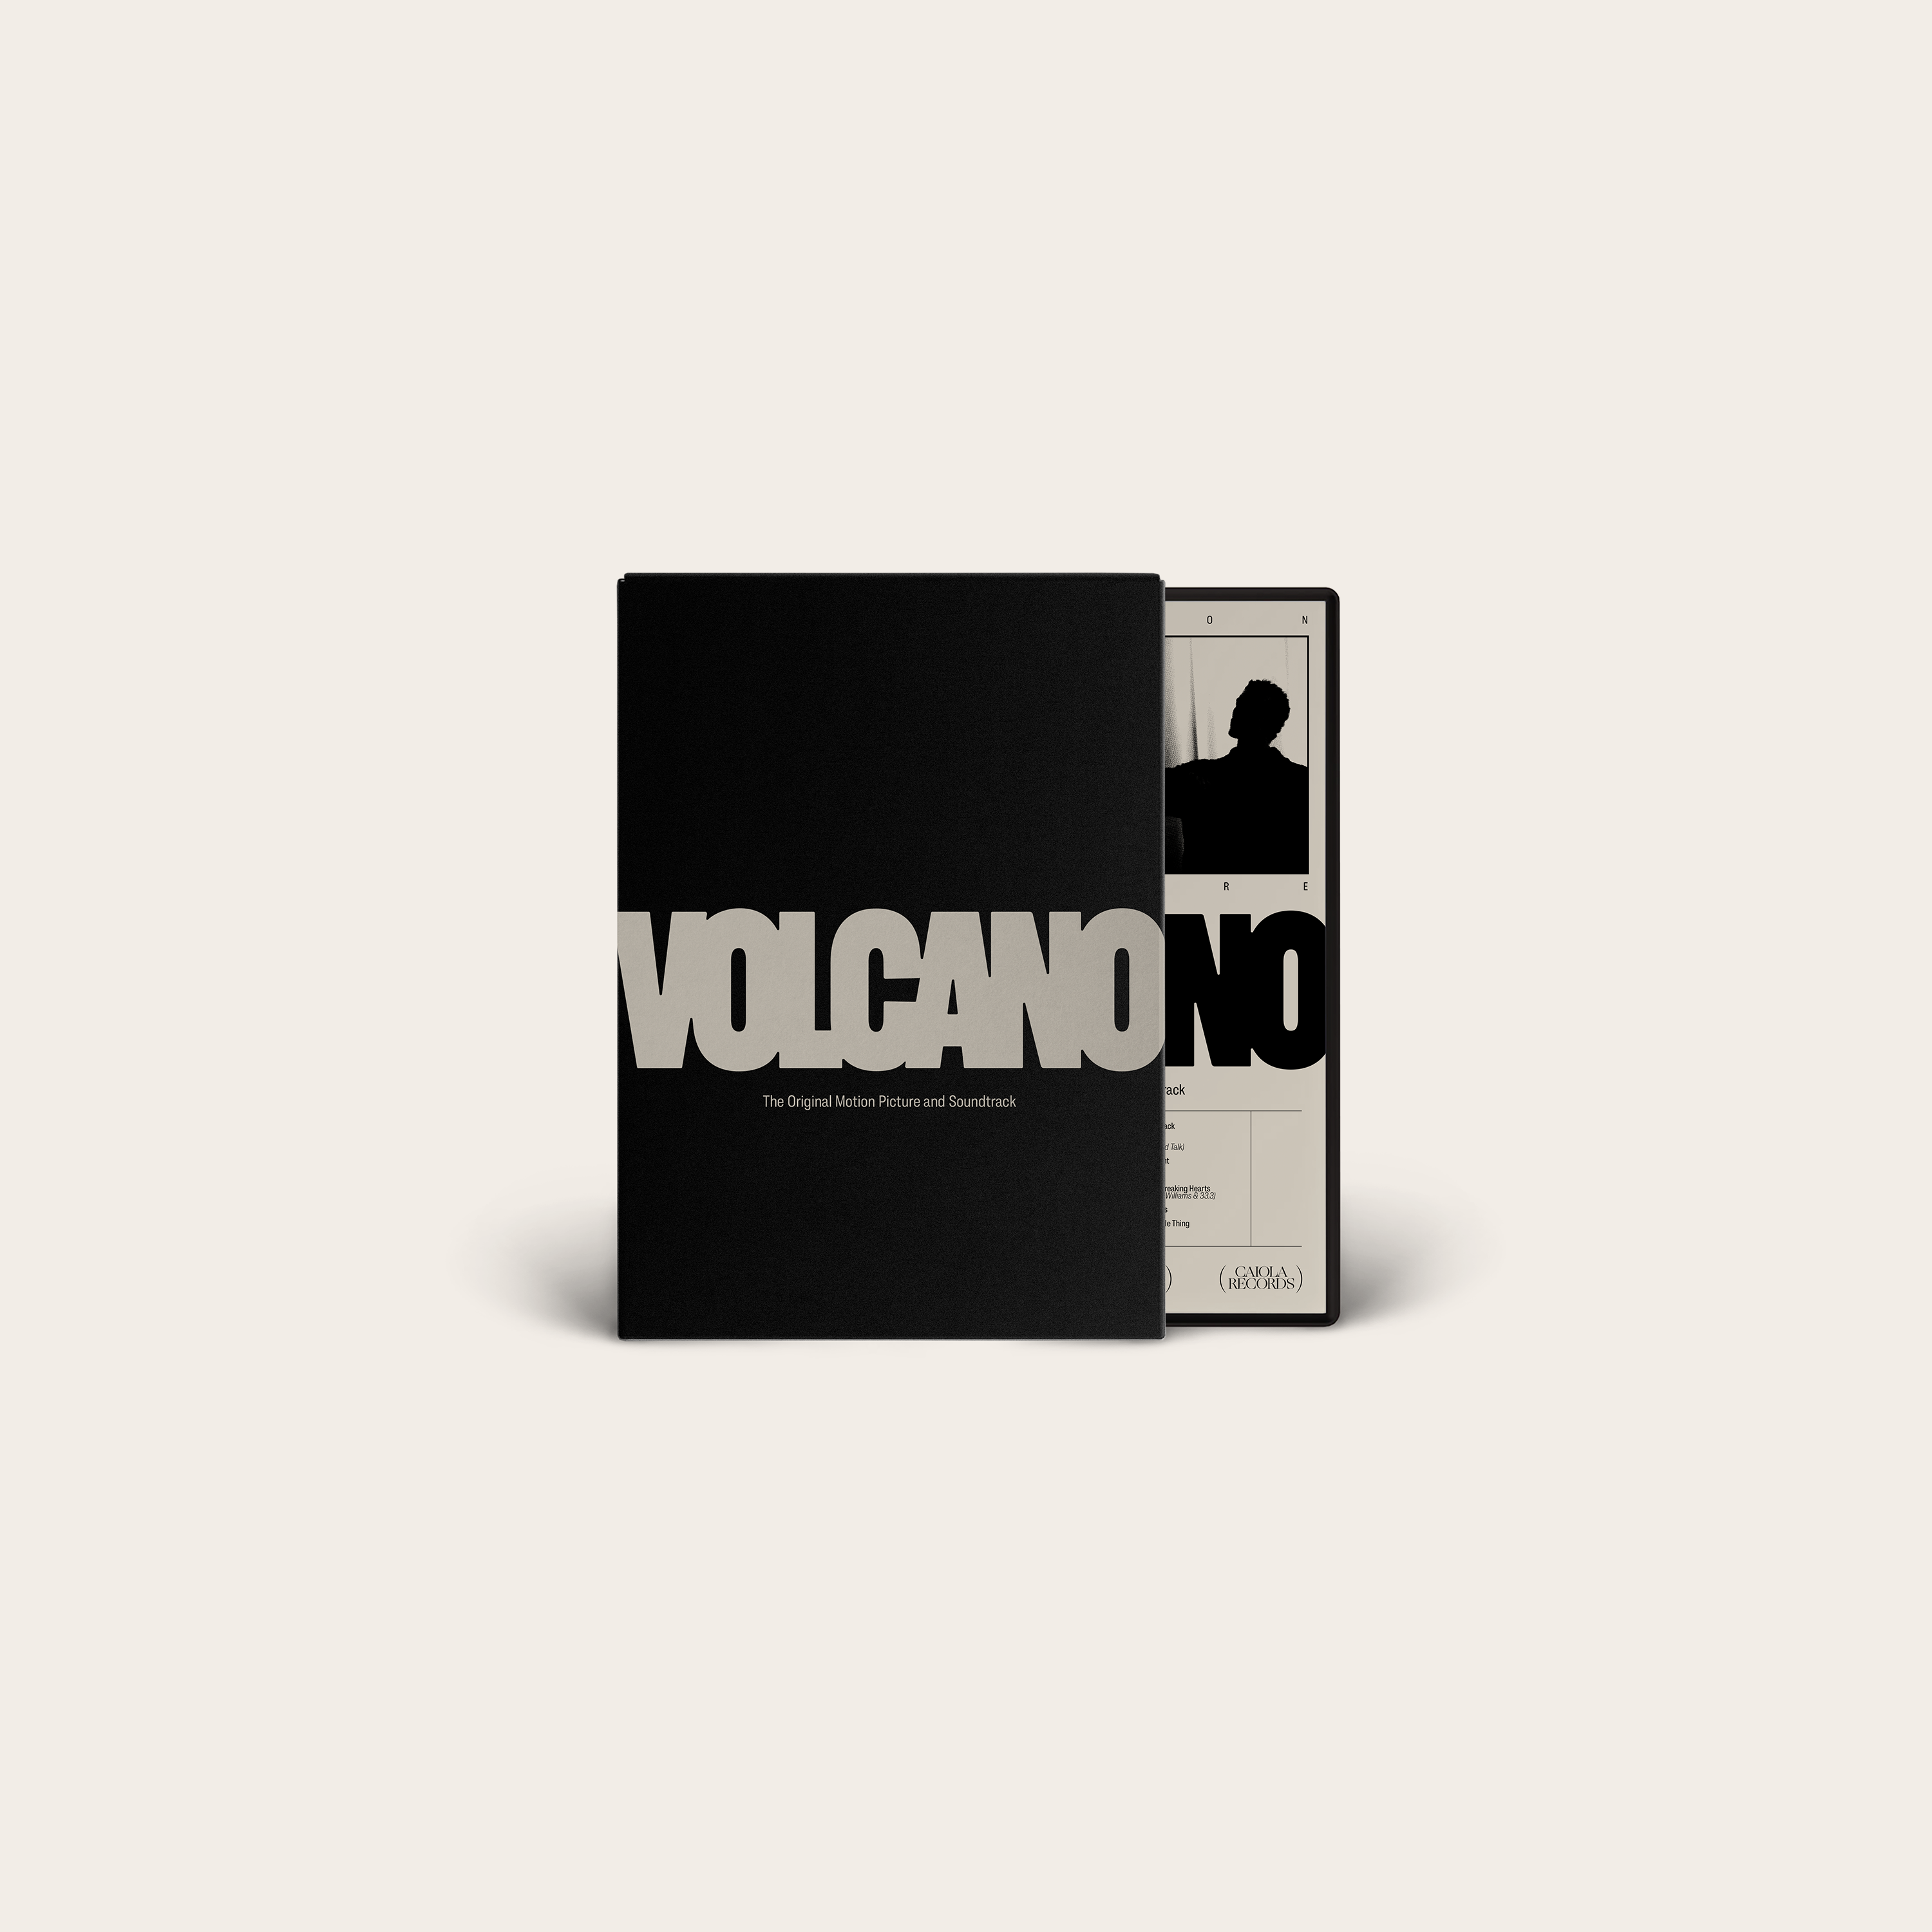 Volcano – CD/DVD